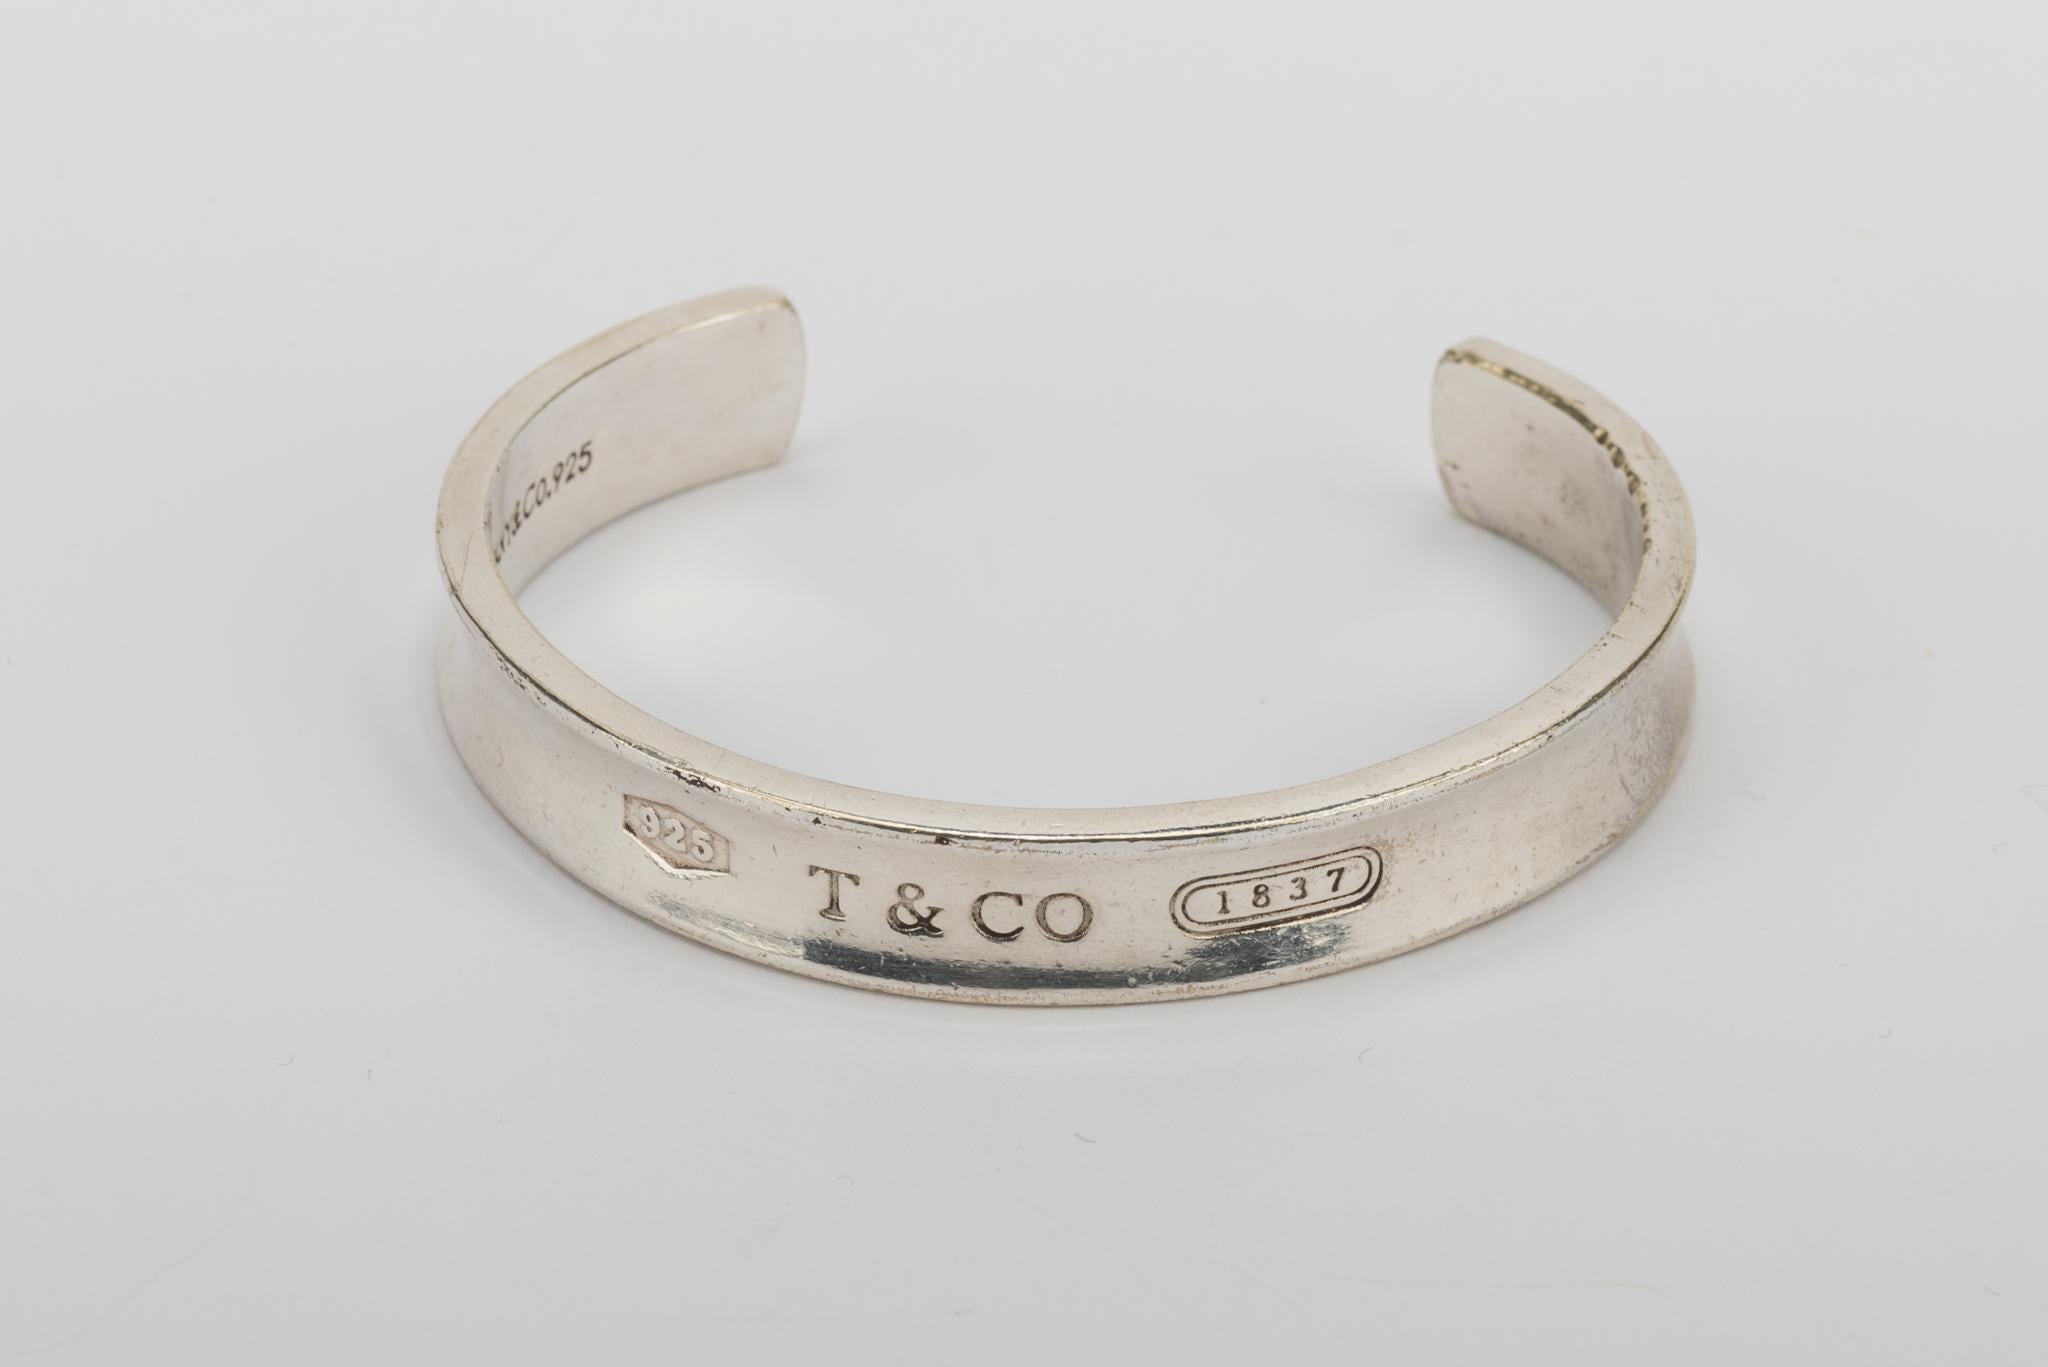 Tiffany & Co. sterling silver mens cuff bracelet. Interior length 6